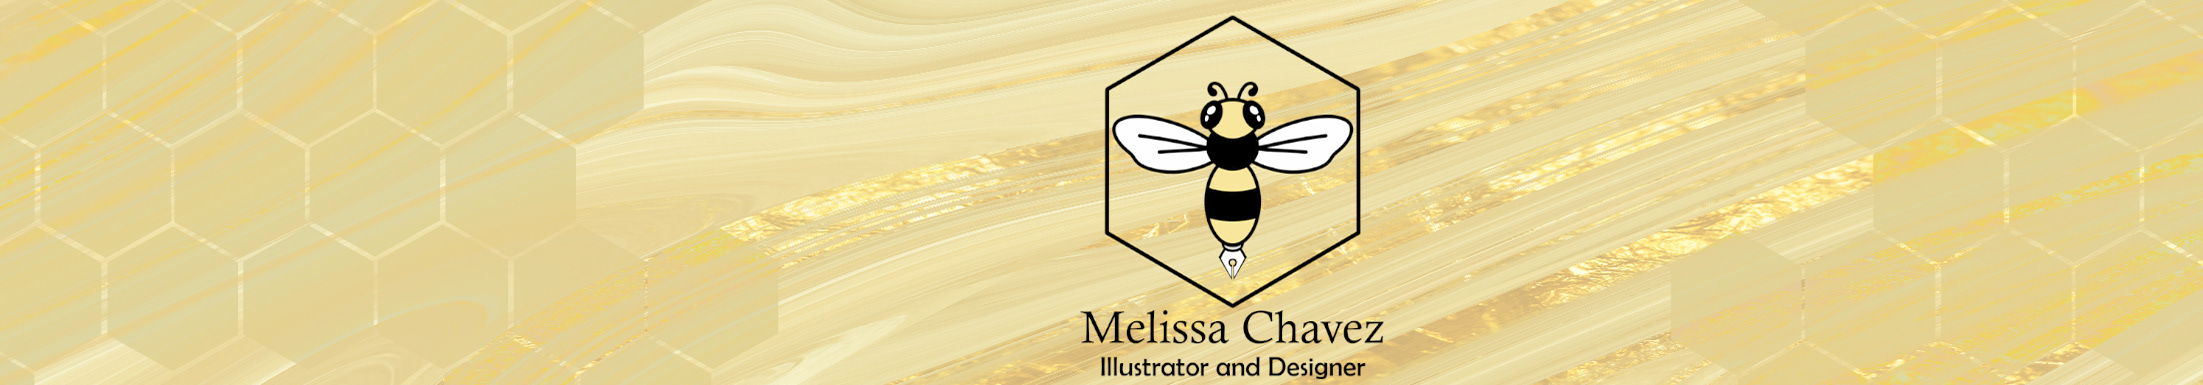 Melissa Chavez's profile banner